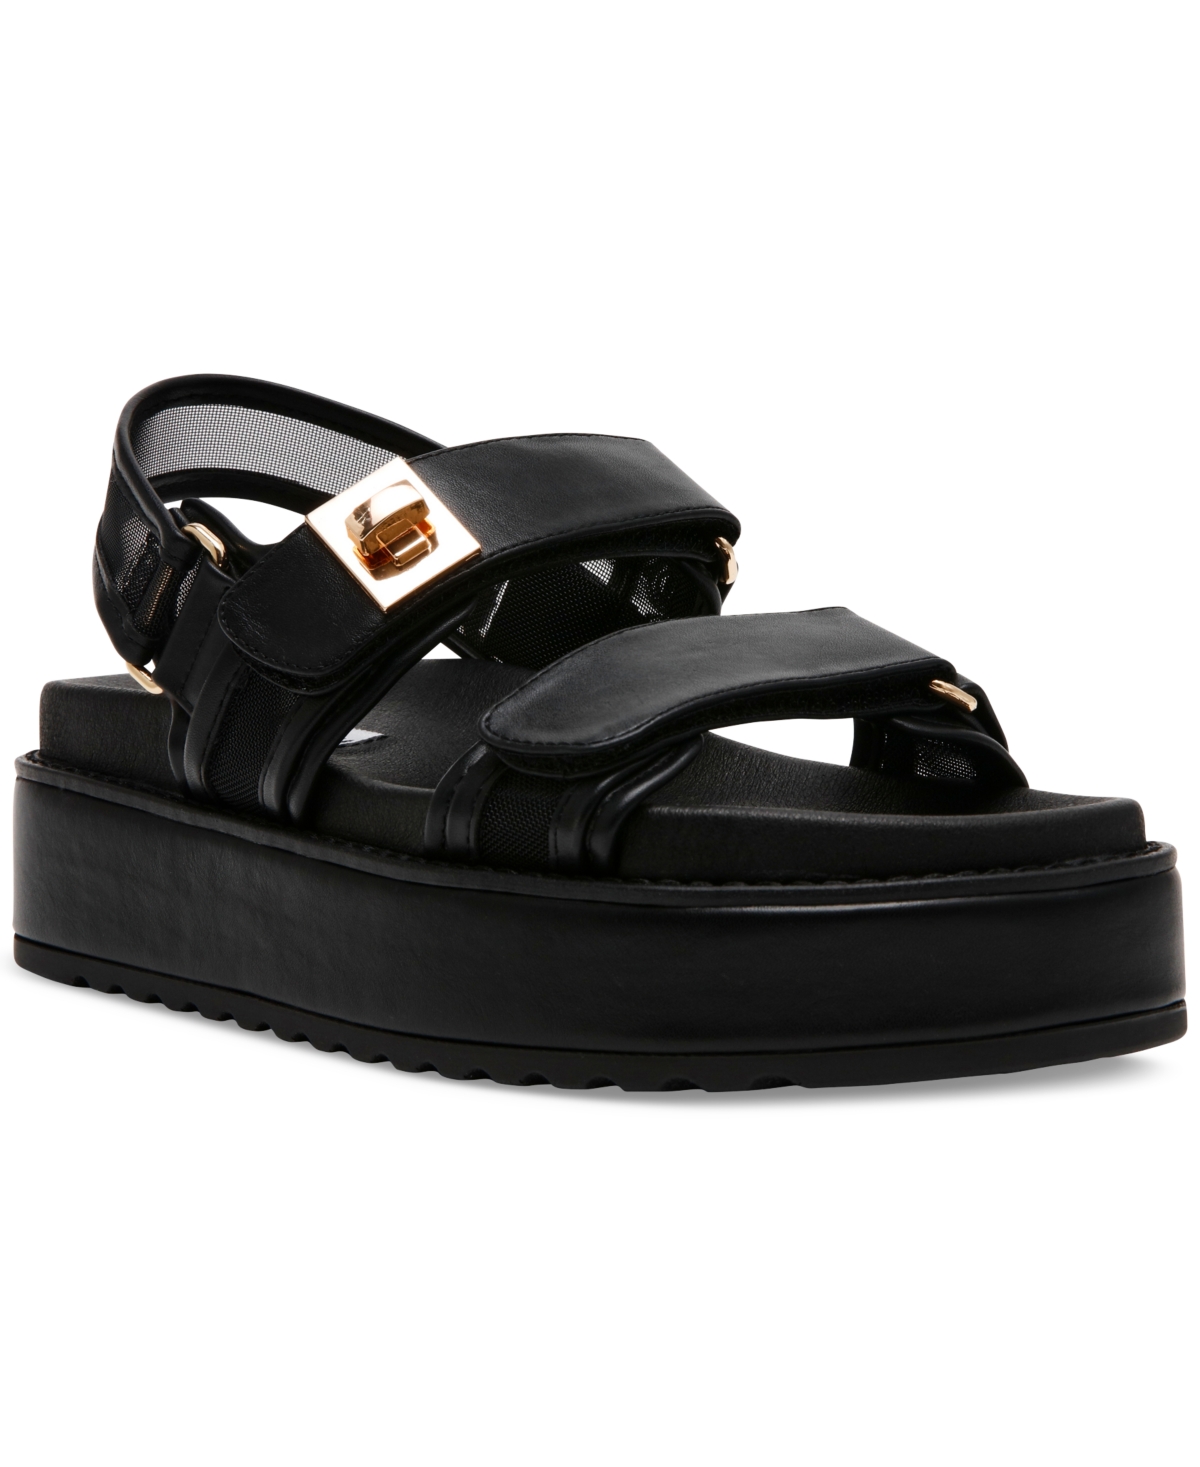 Women's Bigmona Platform Footbed Sandals - Black Leather/Mesh